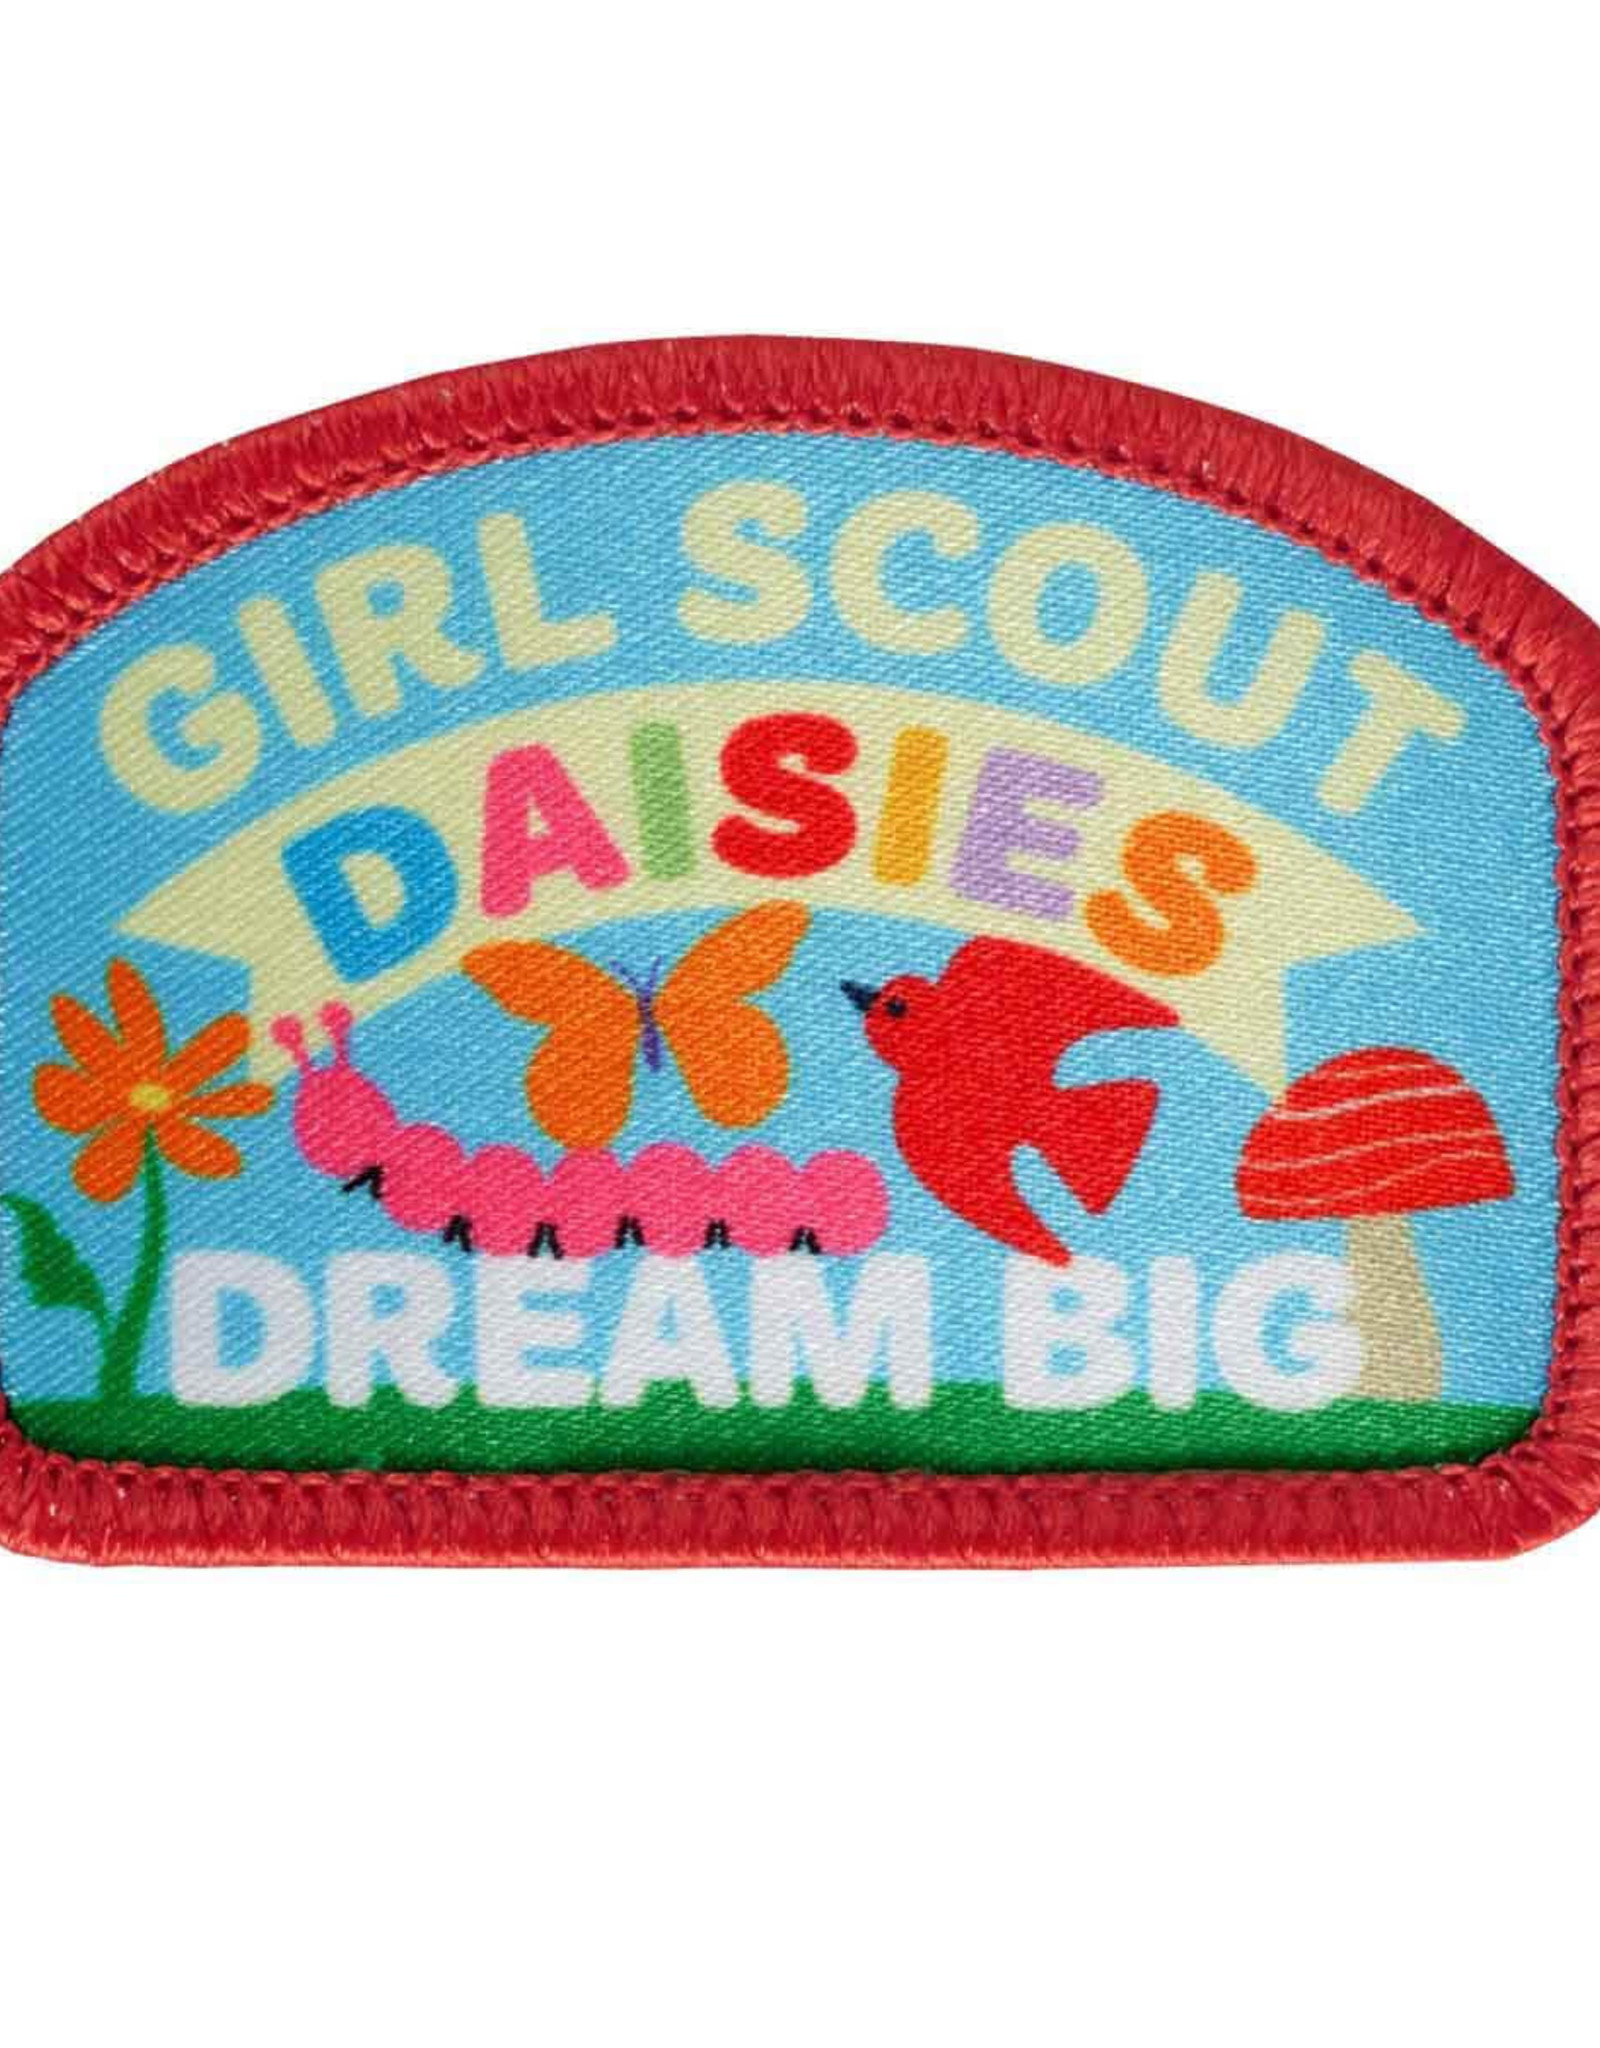 GSUSA Girl Scout Daisies Dream Big Fun Patch